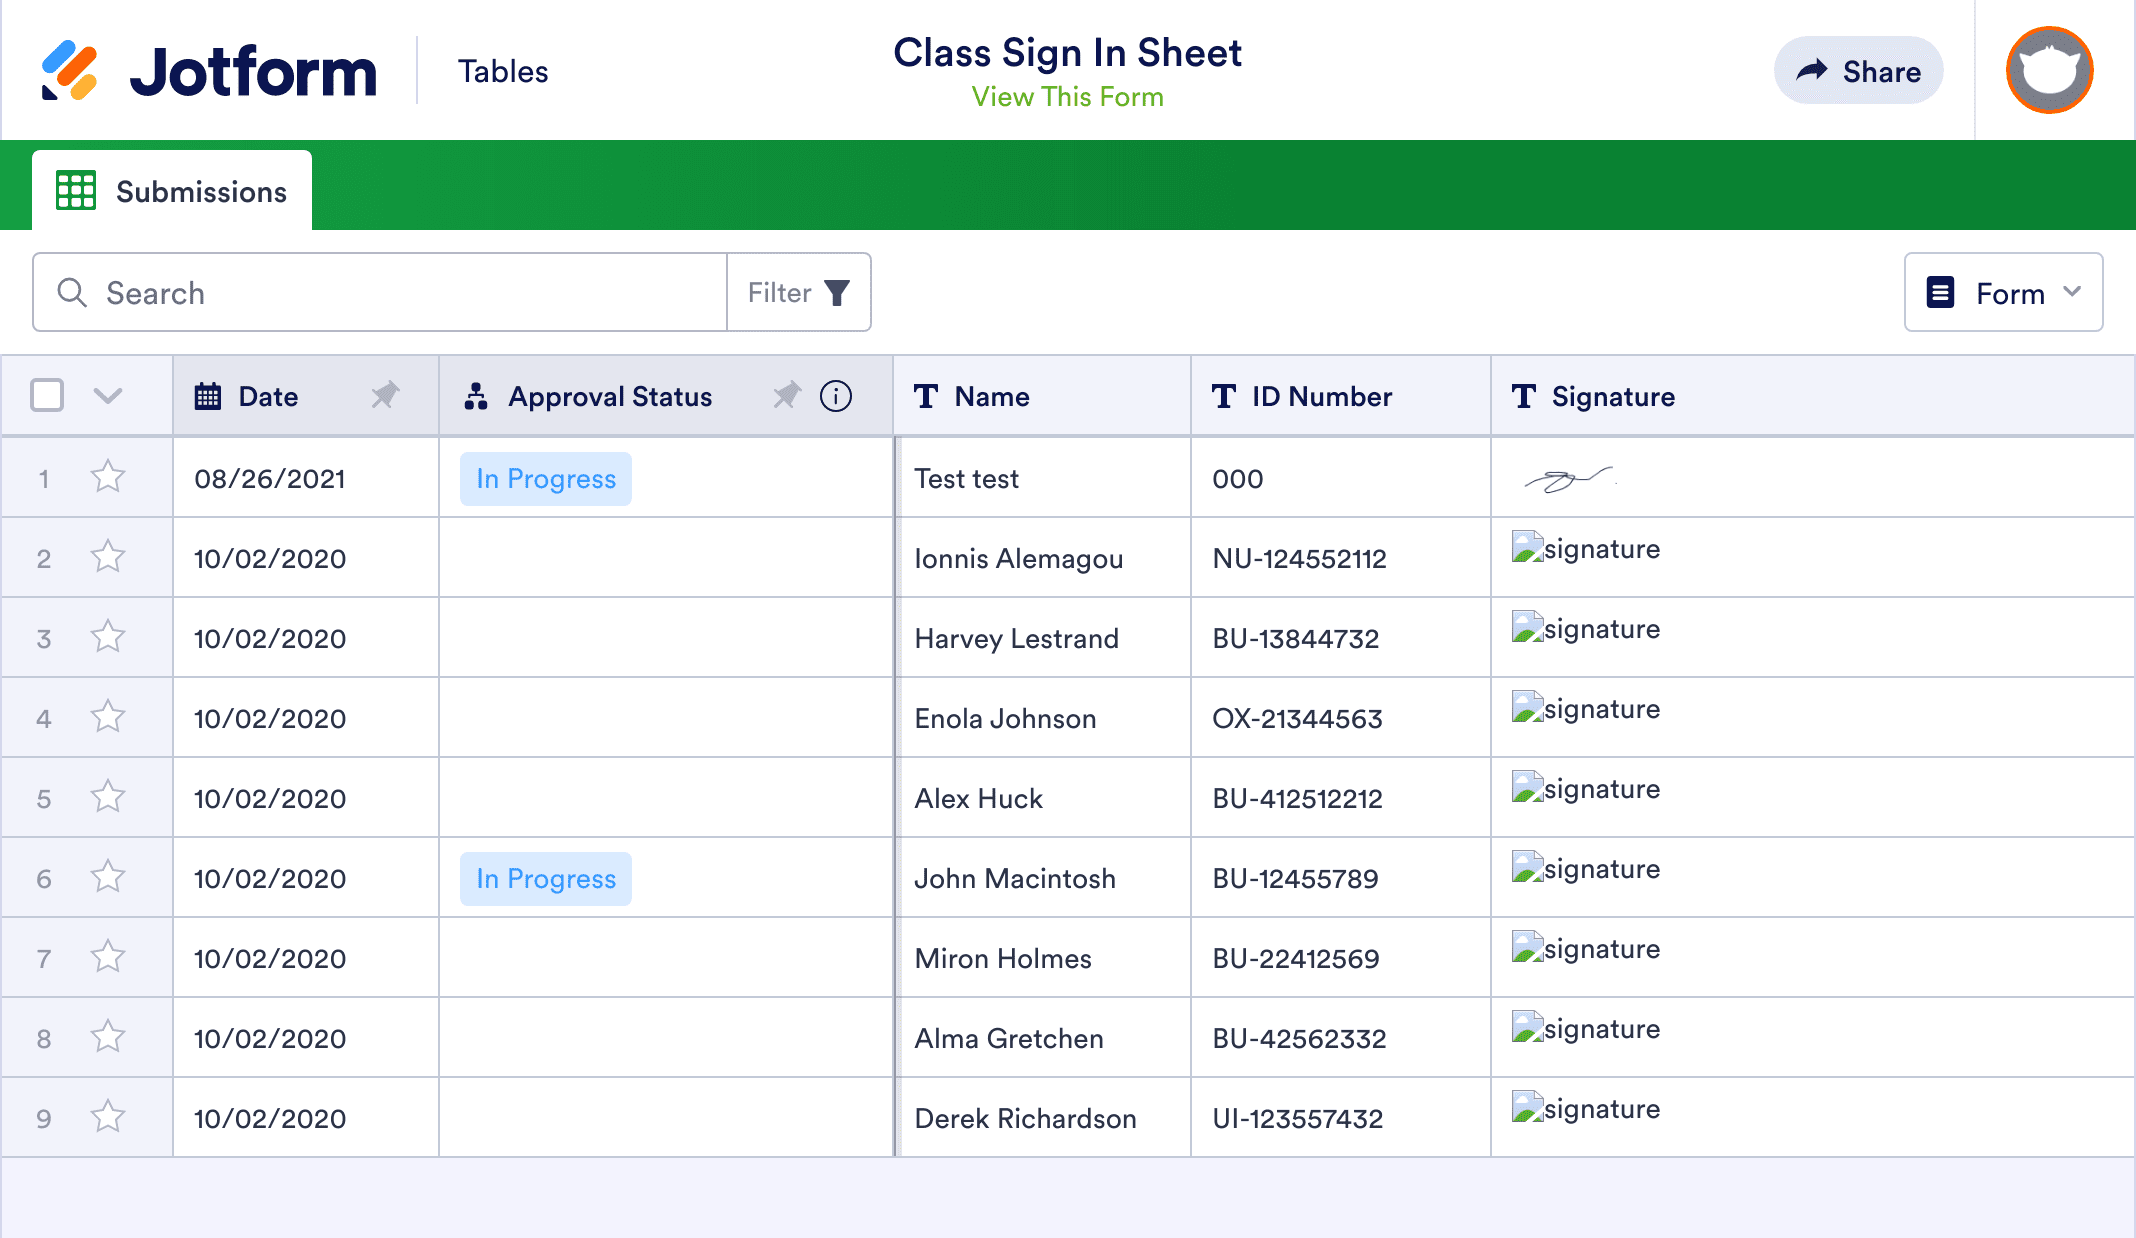 Class Sign In Sheet